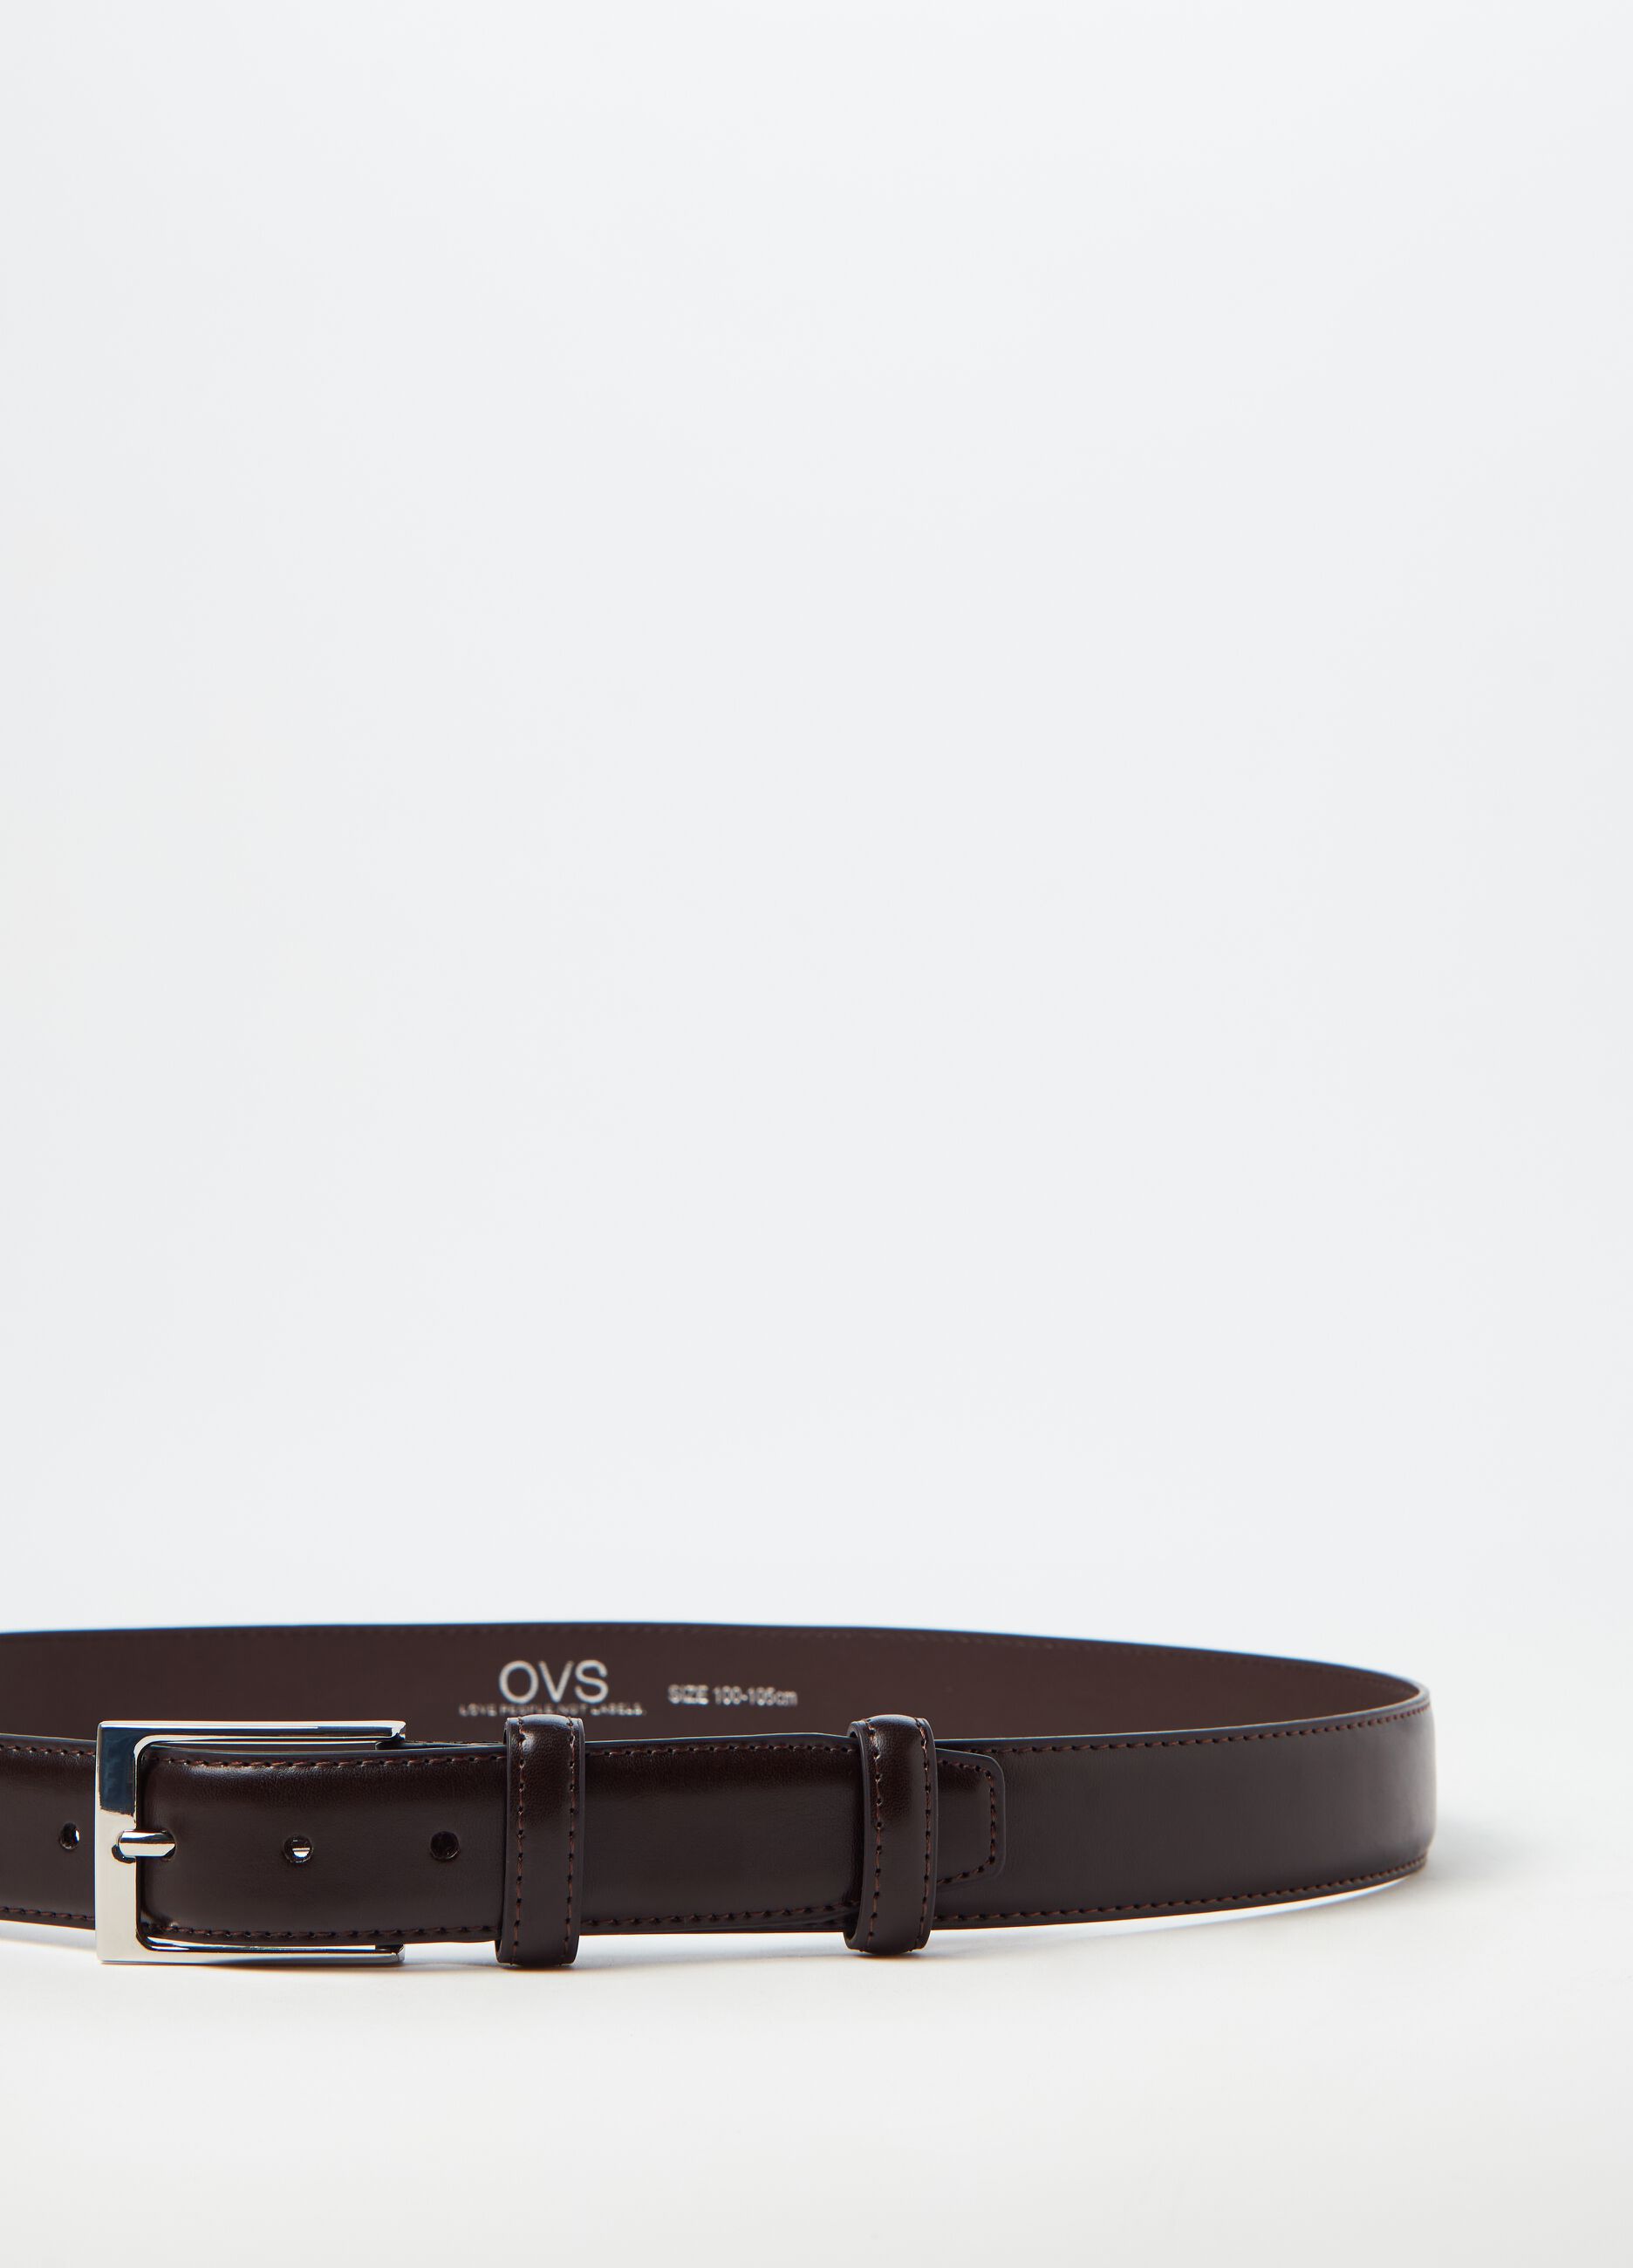 Belt with metal buckle.